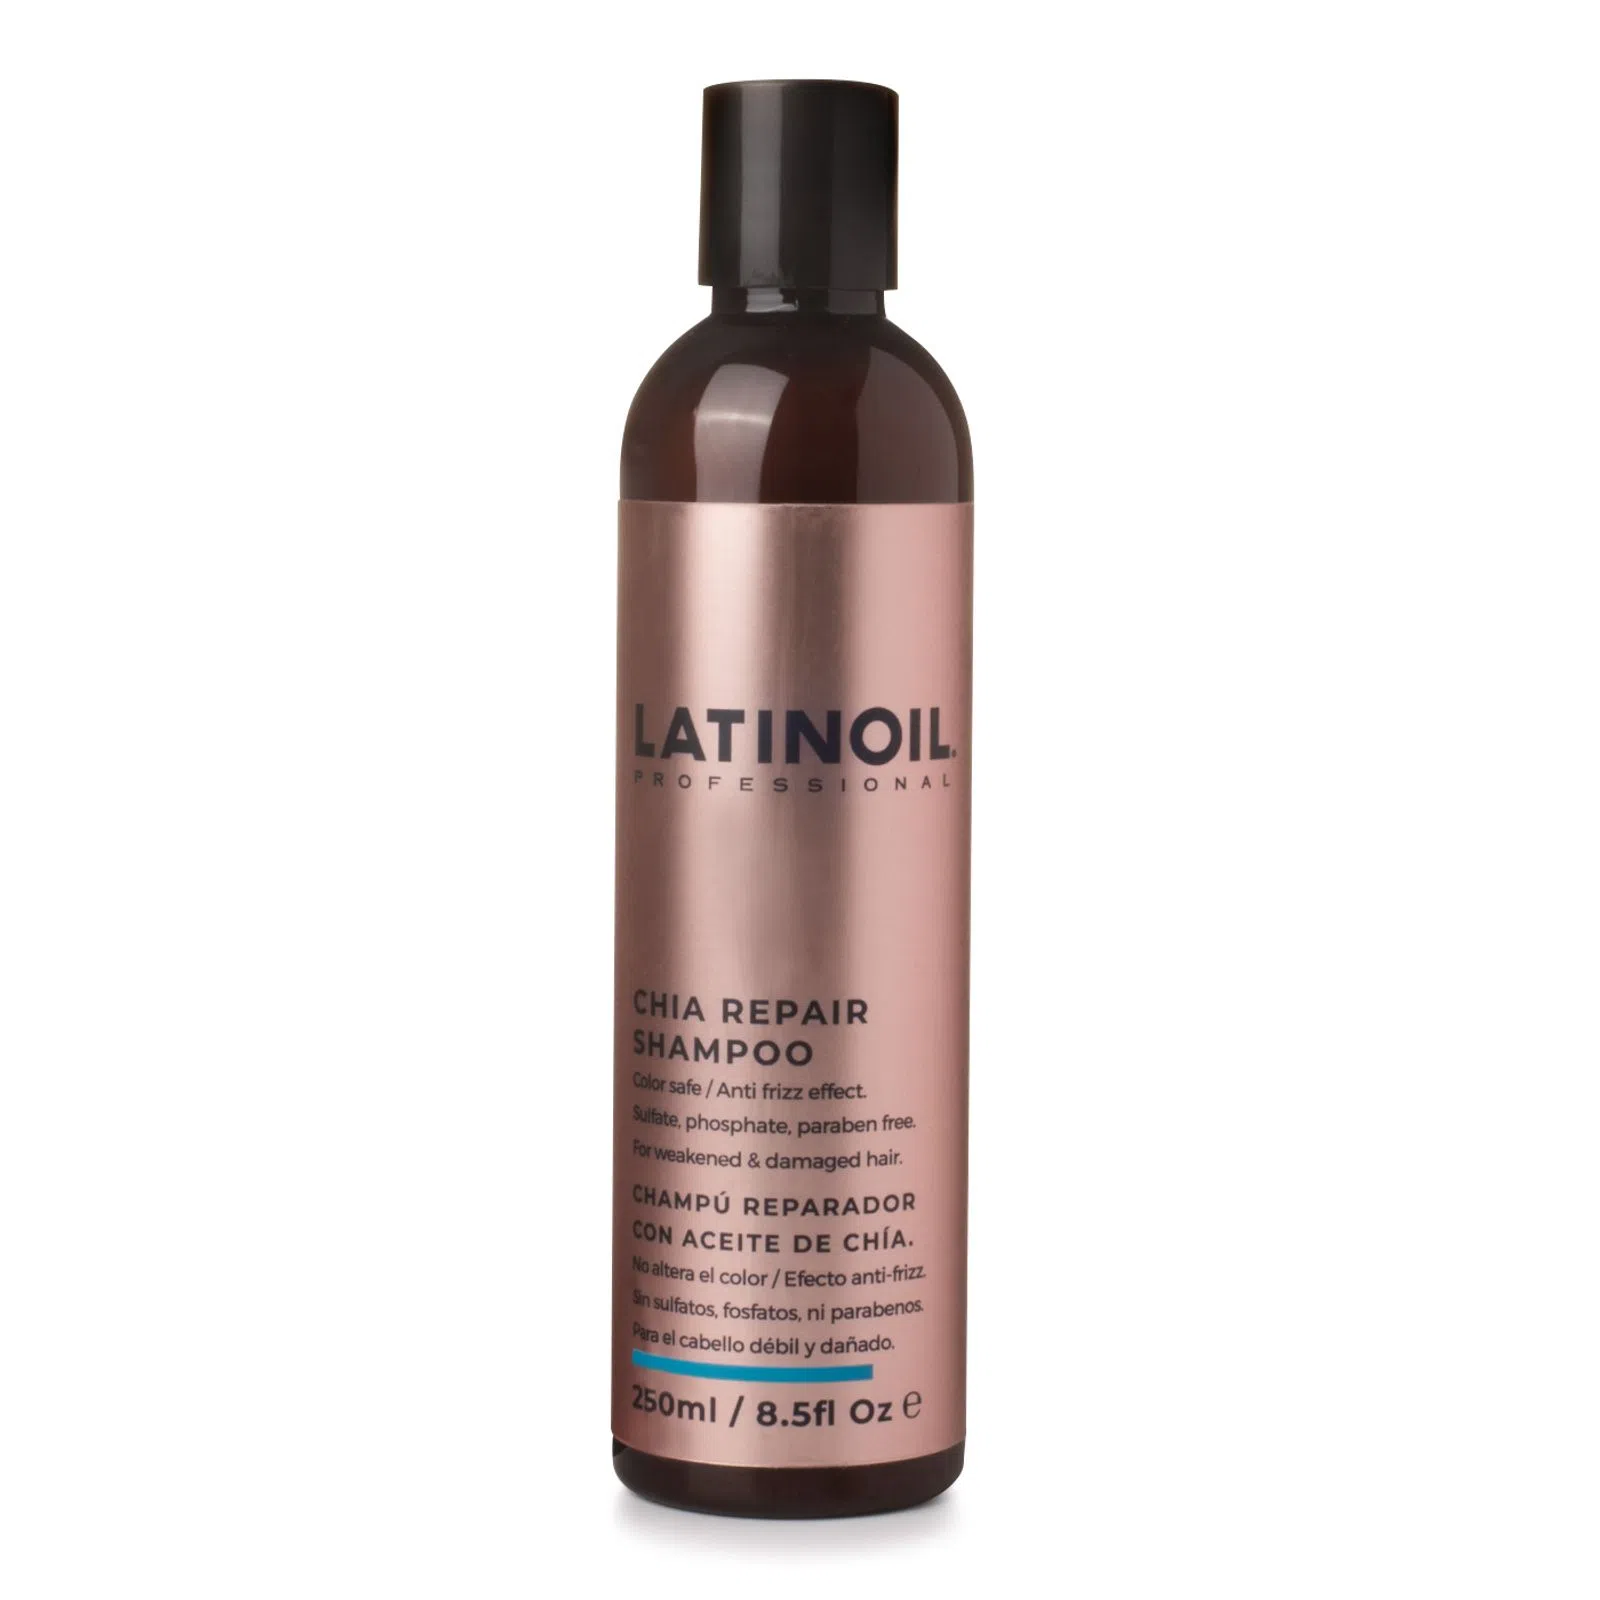 LatinOil Chia Repair Shampoo 250ml - Restaura cabello débil y dañado, es libre de sulfatos, parabénos y fosfátos